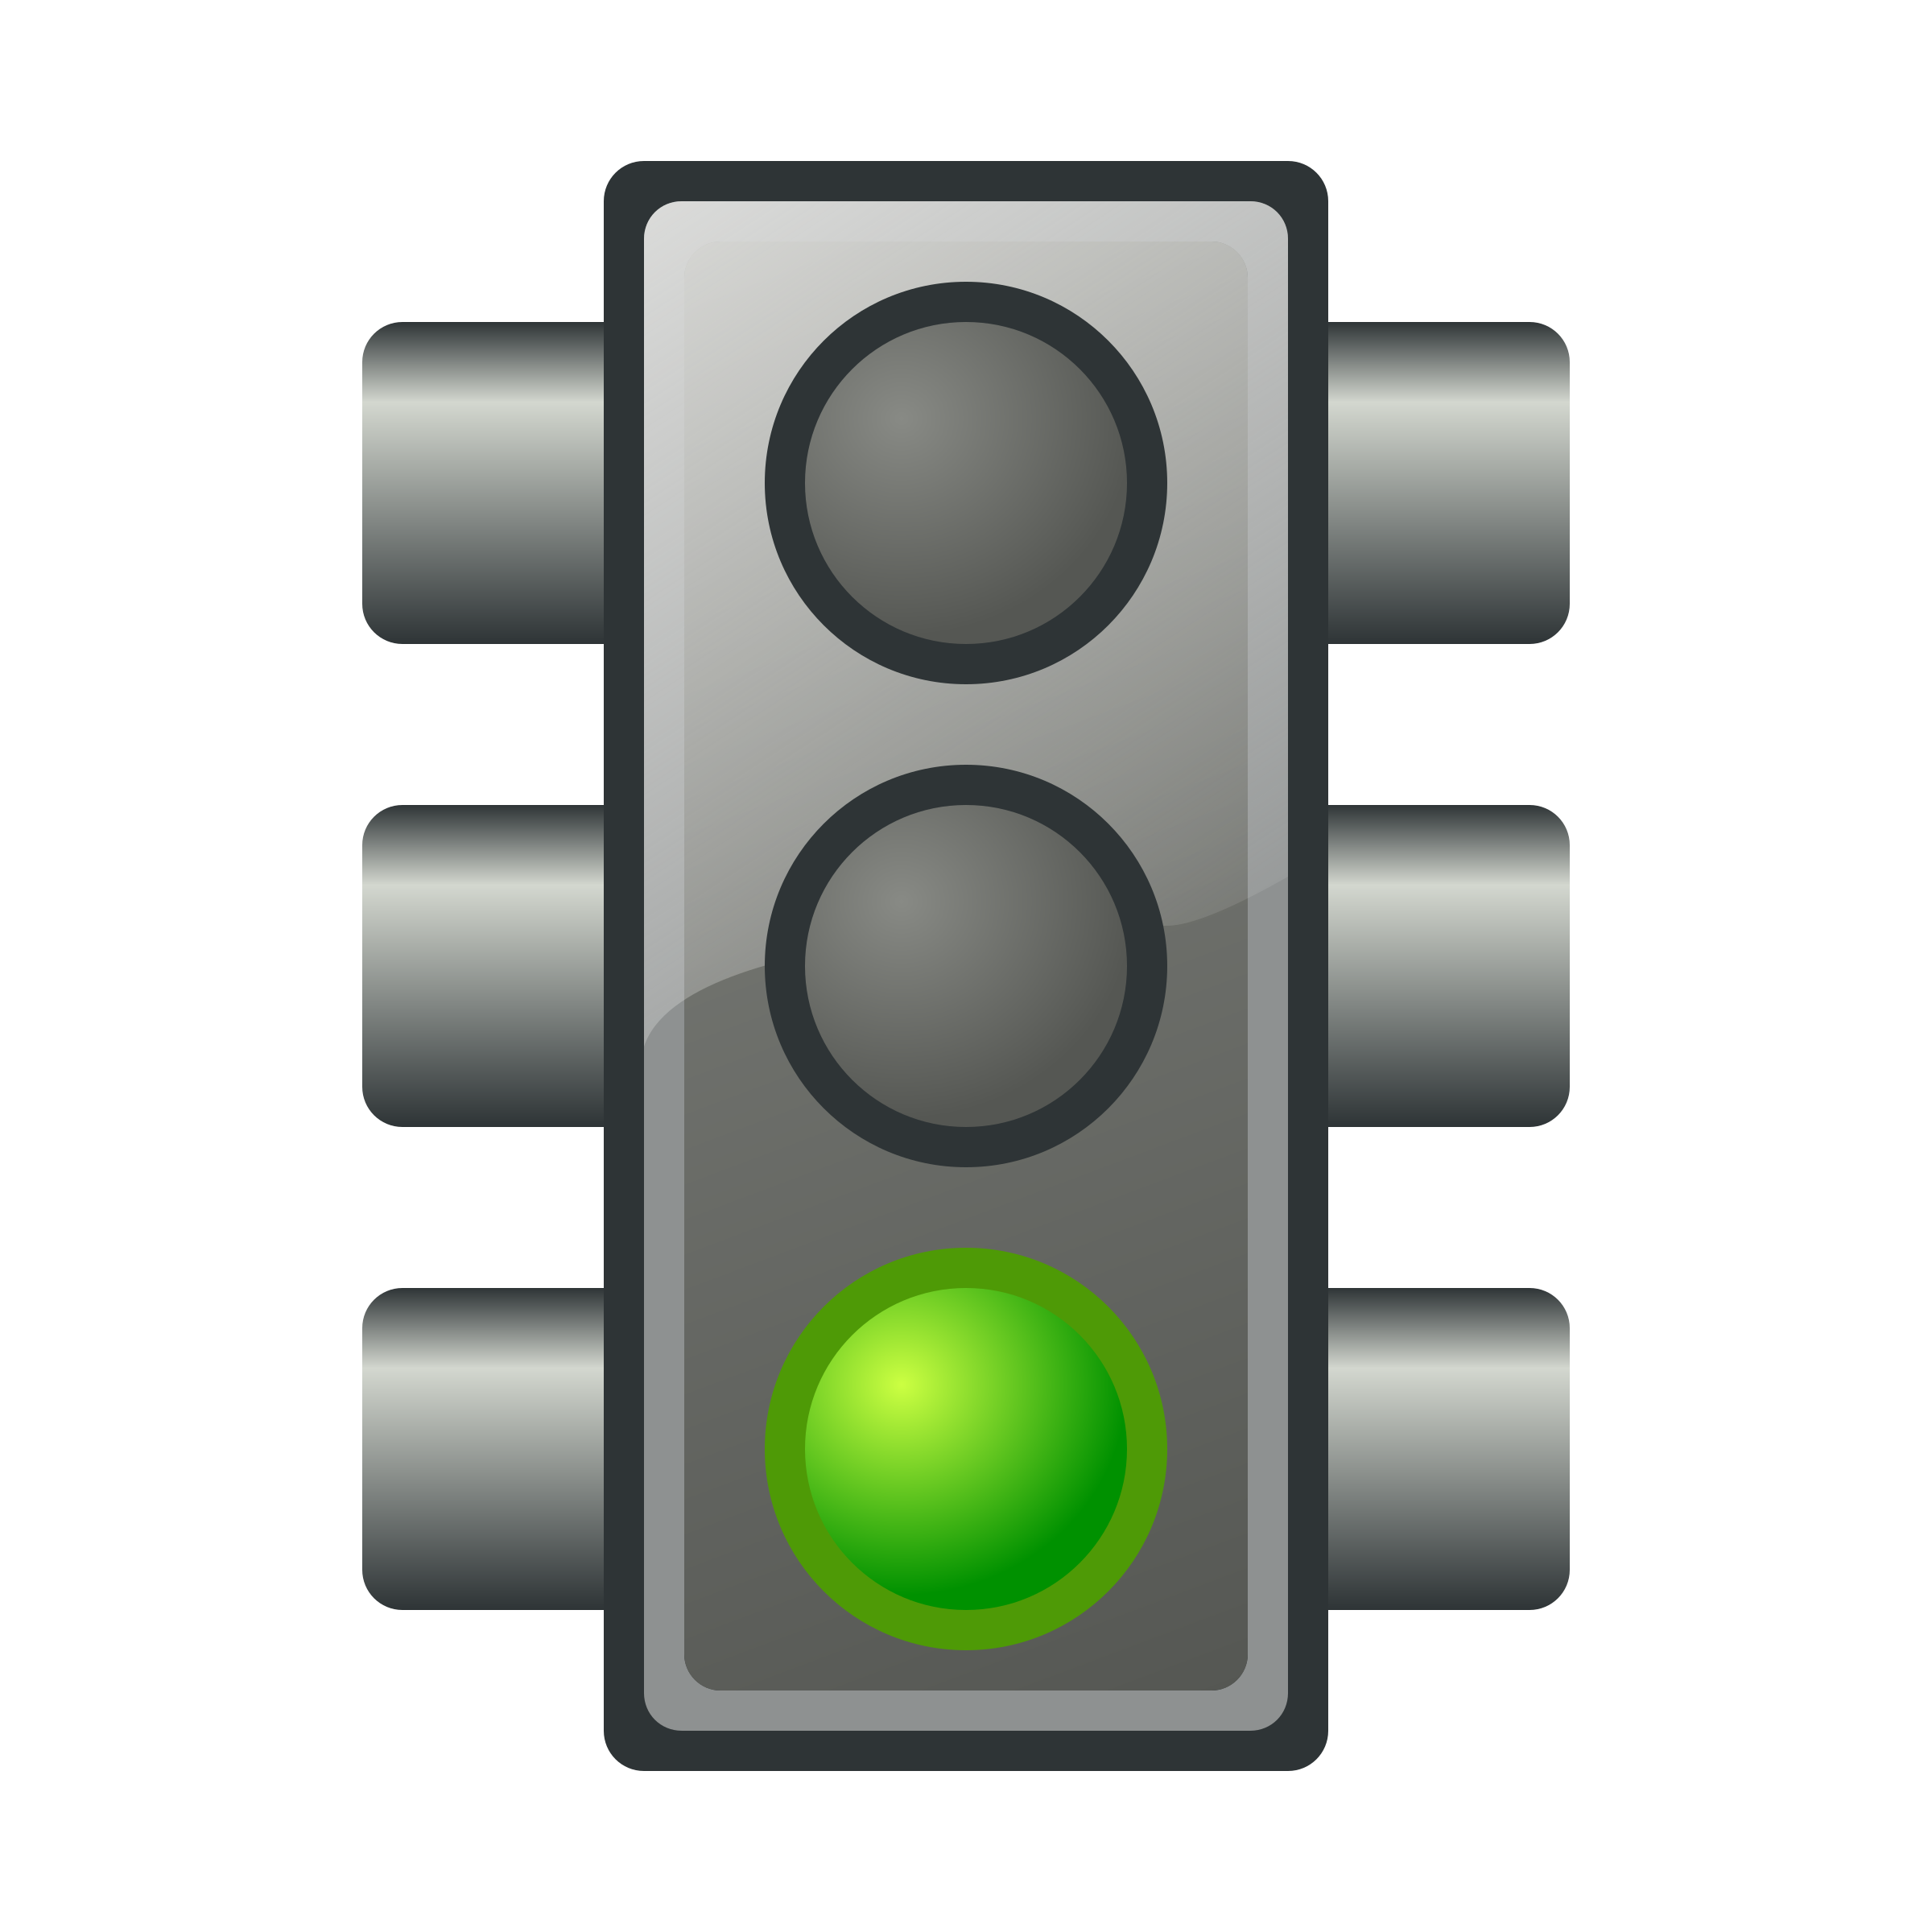 Traffic light green clipart